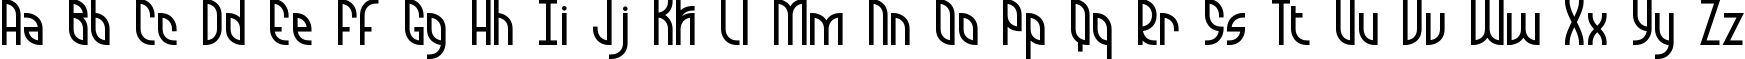 Пример написания английского алфавита шрифтом Quarantine BRK